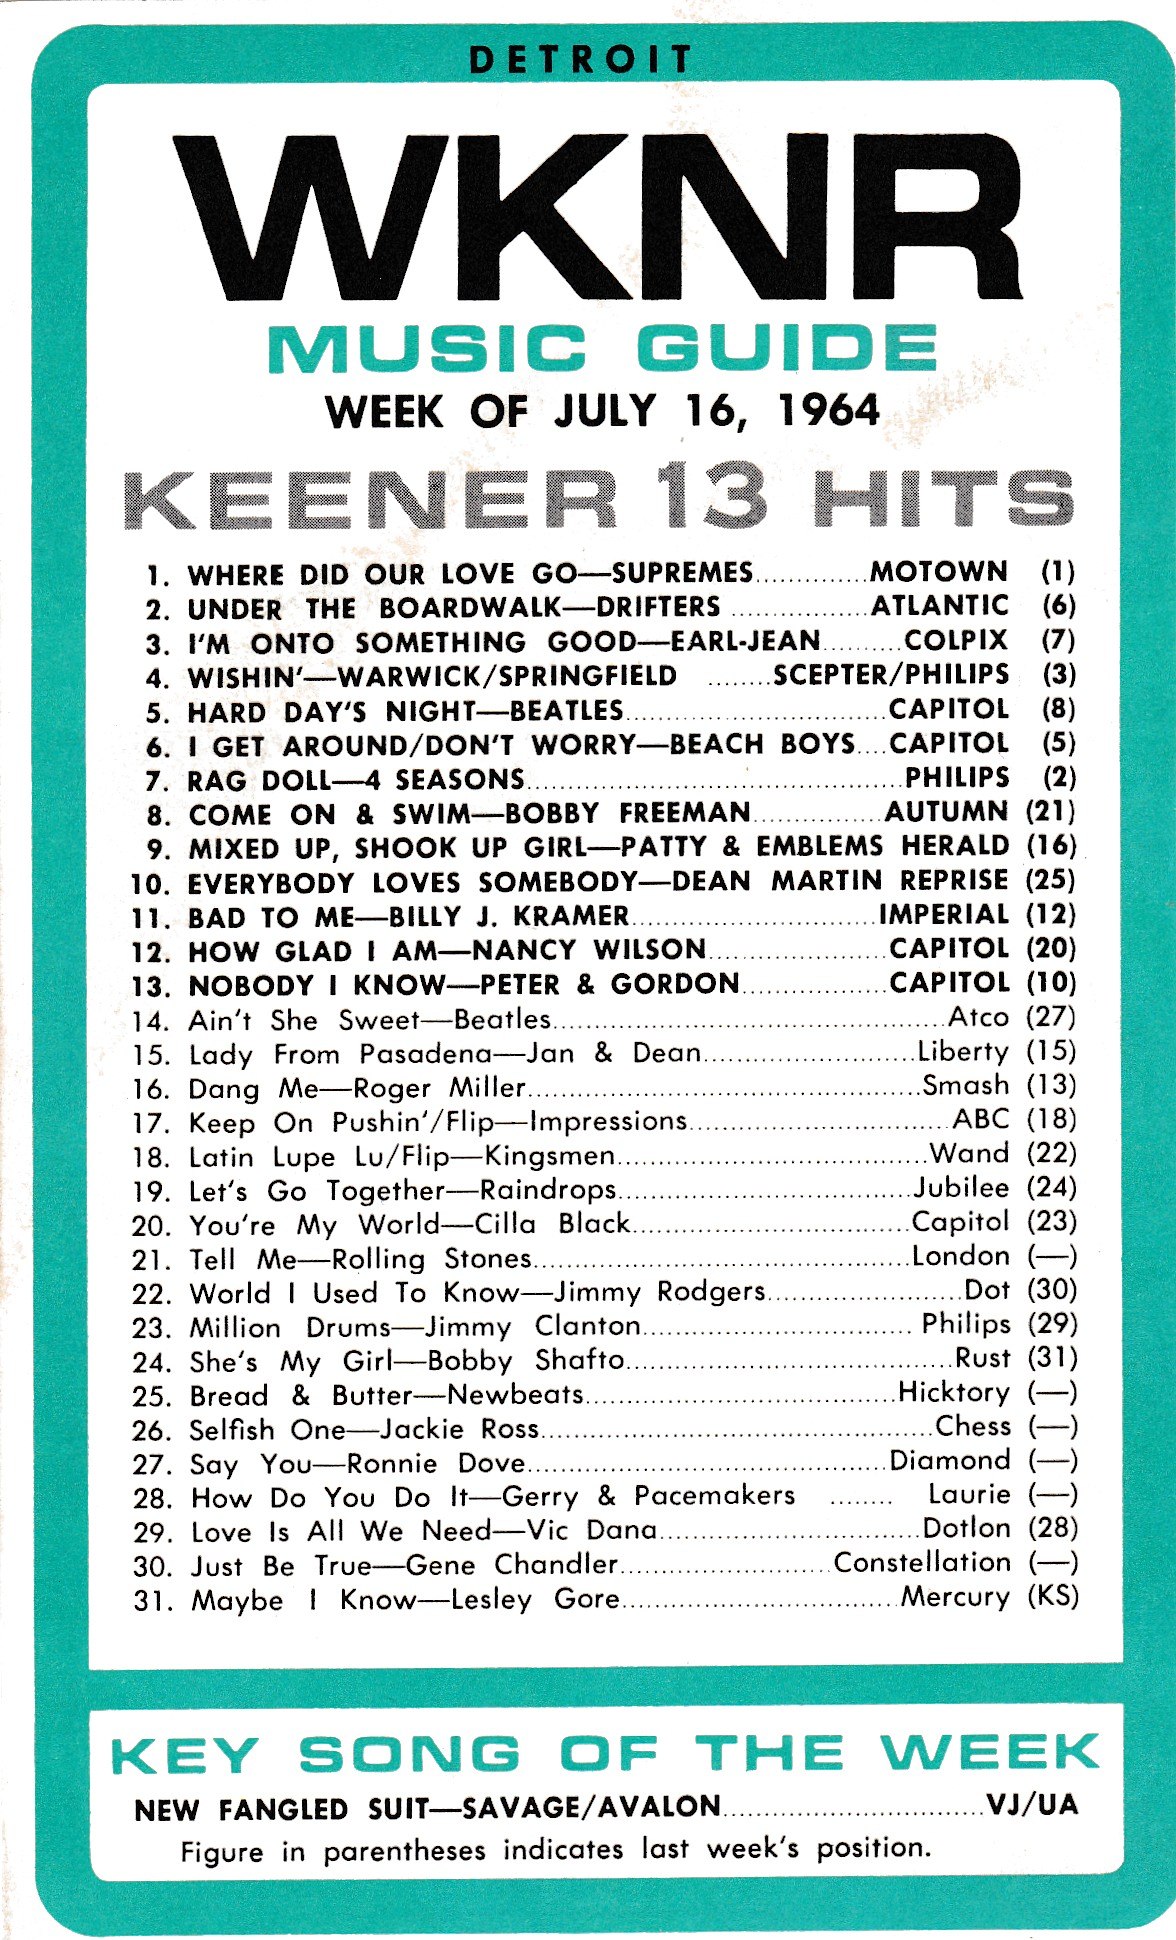 WKNR SURVEY - JULY 16, 1964